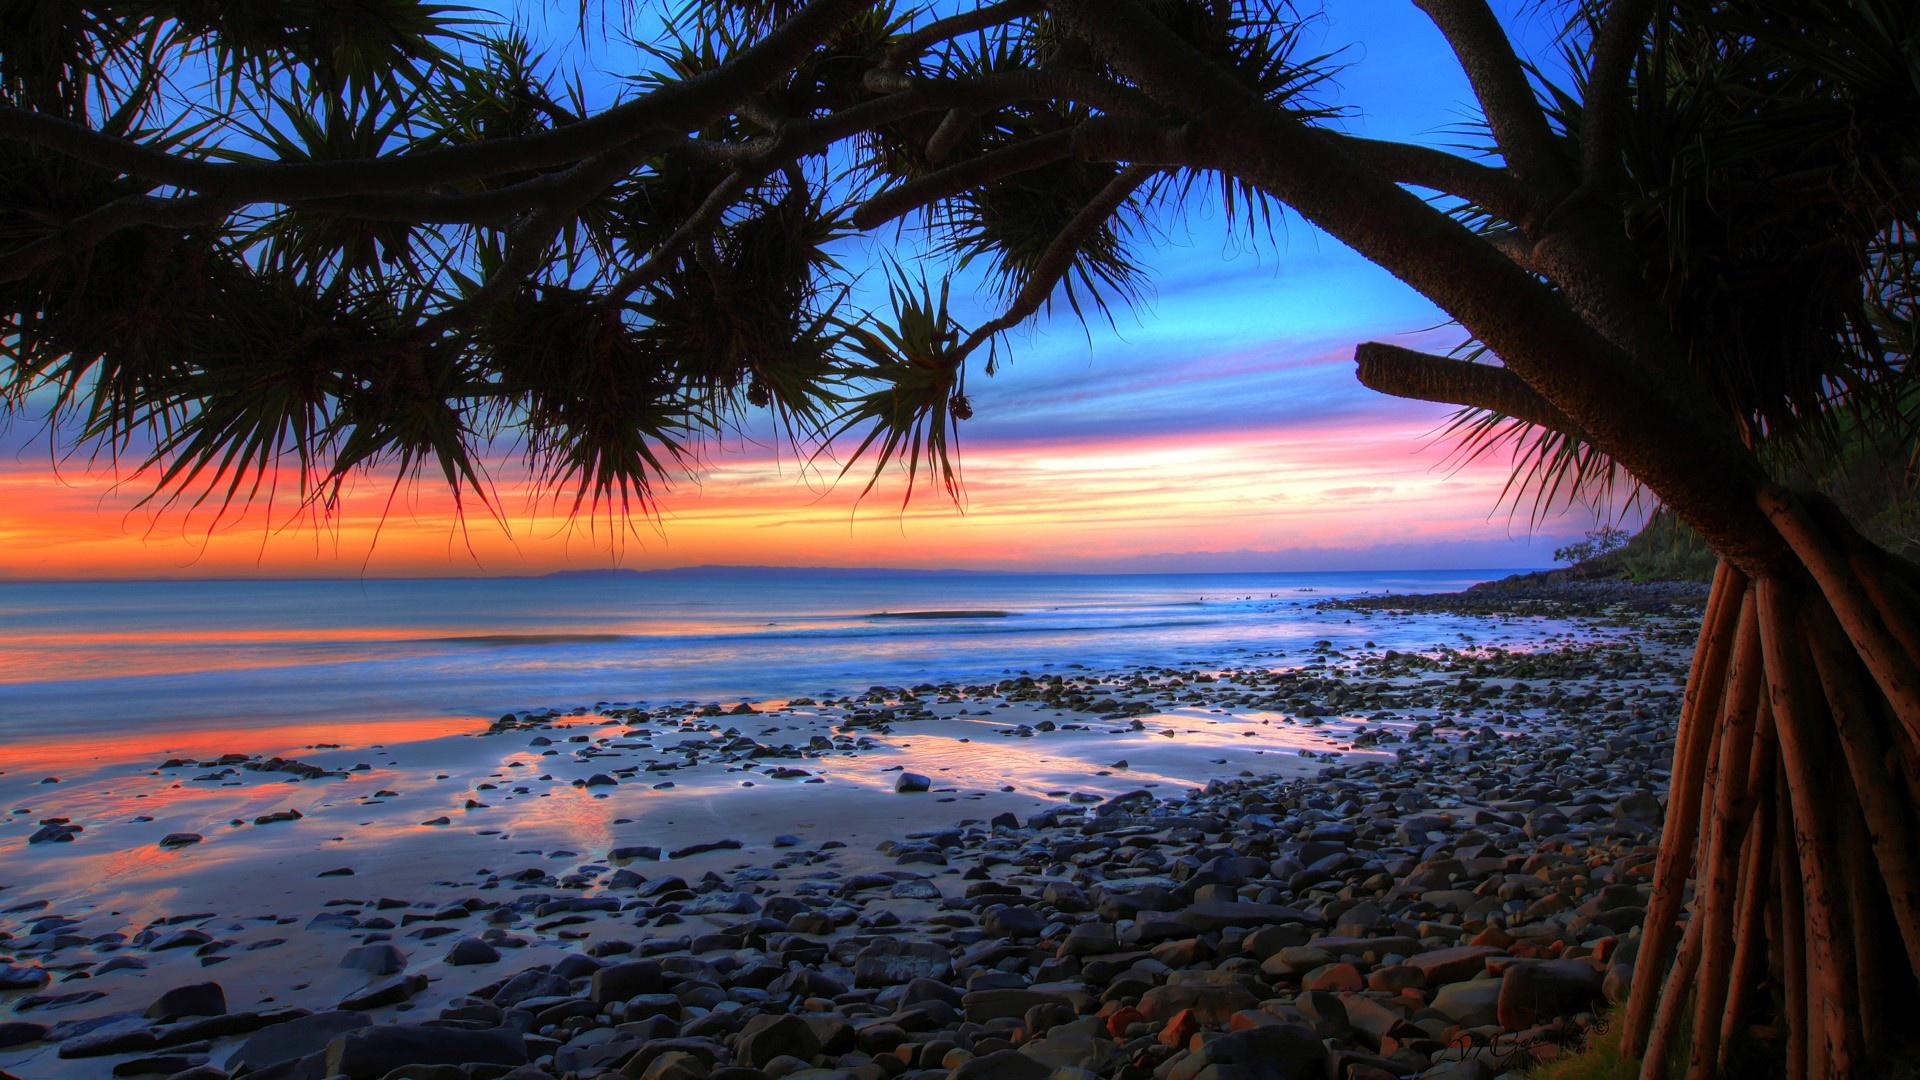  Windows 8 Background Windows 8 Australian Beach Sunset Wallpaper x